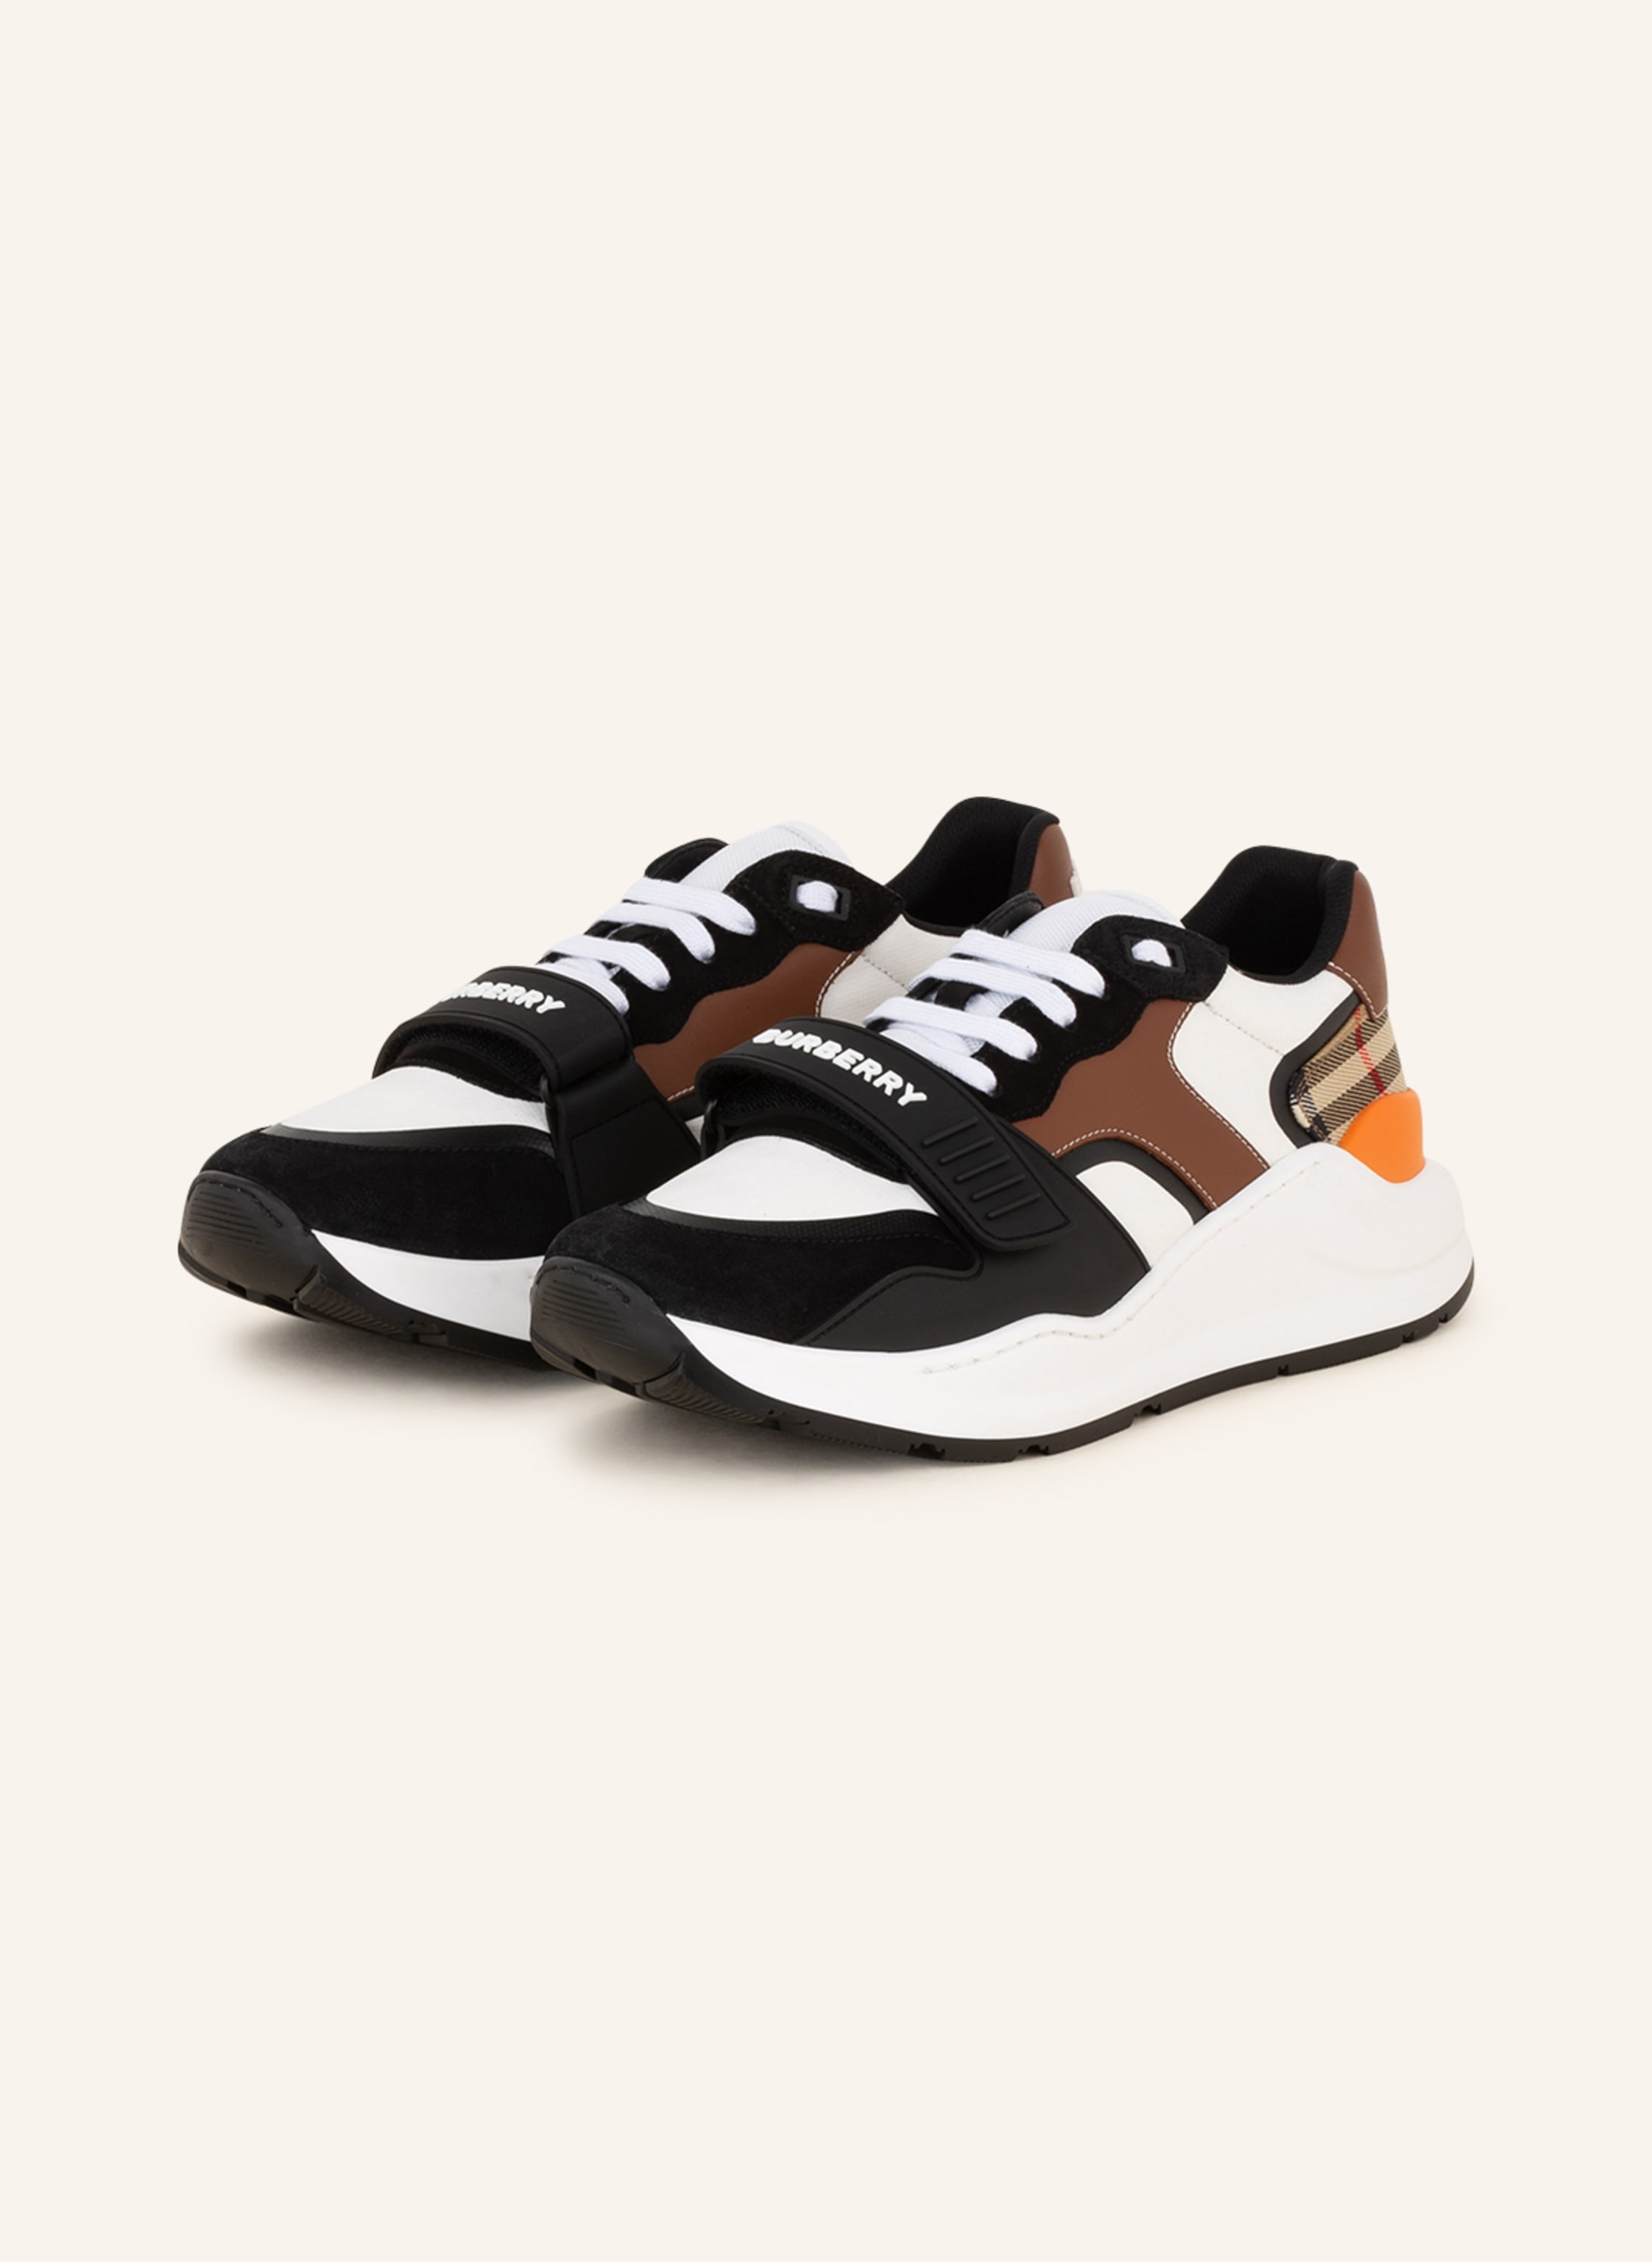 BURBERRY Sneakers RAMSEY in black/ brown/ white | Breuninger